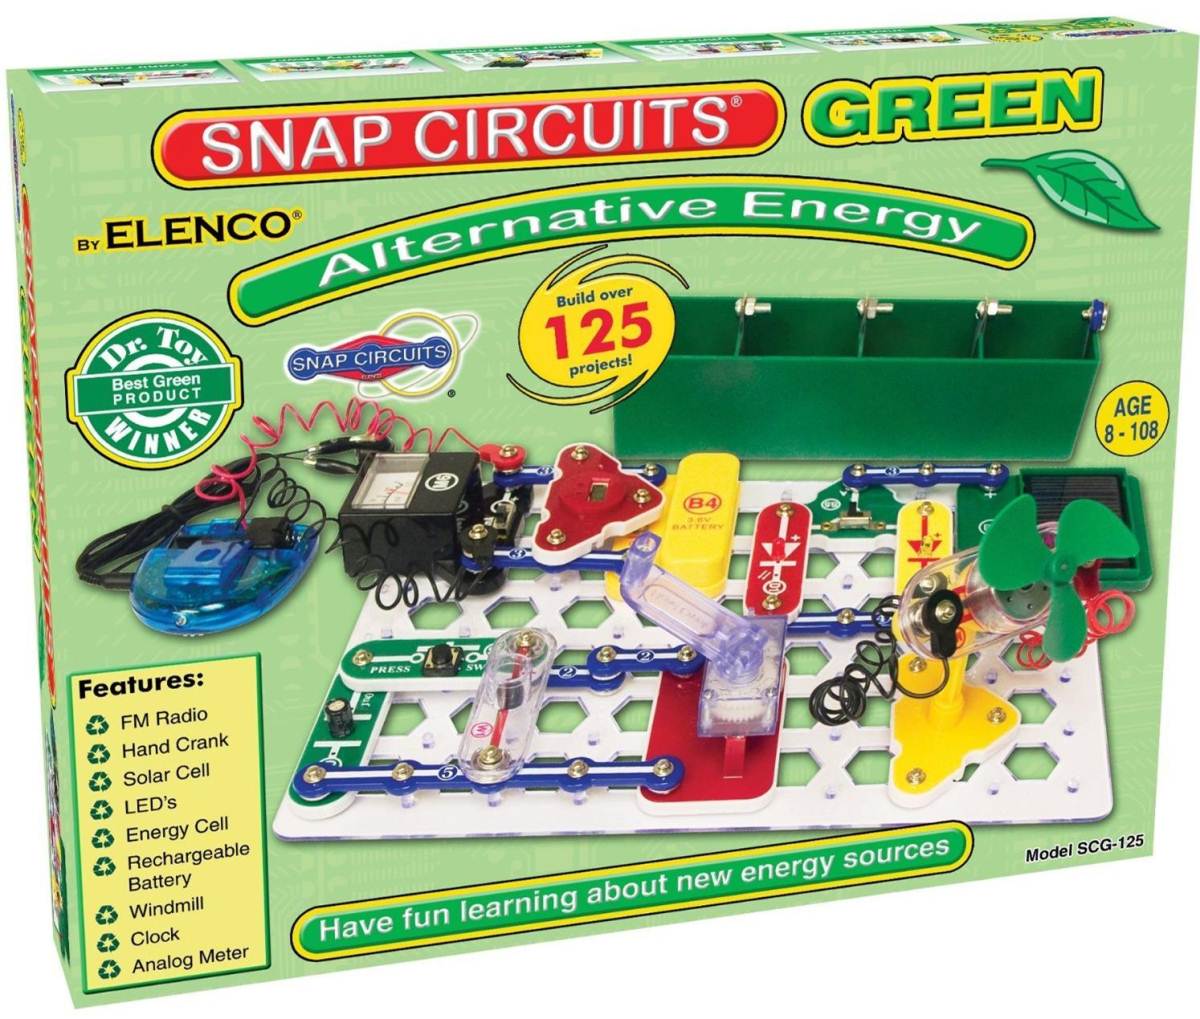 The Snap Circuits alternative energy kit. ($46)